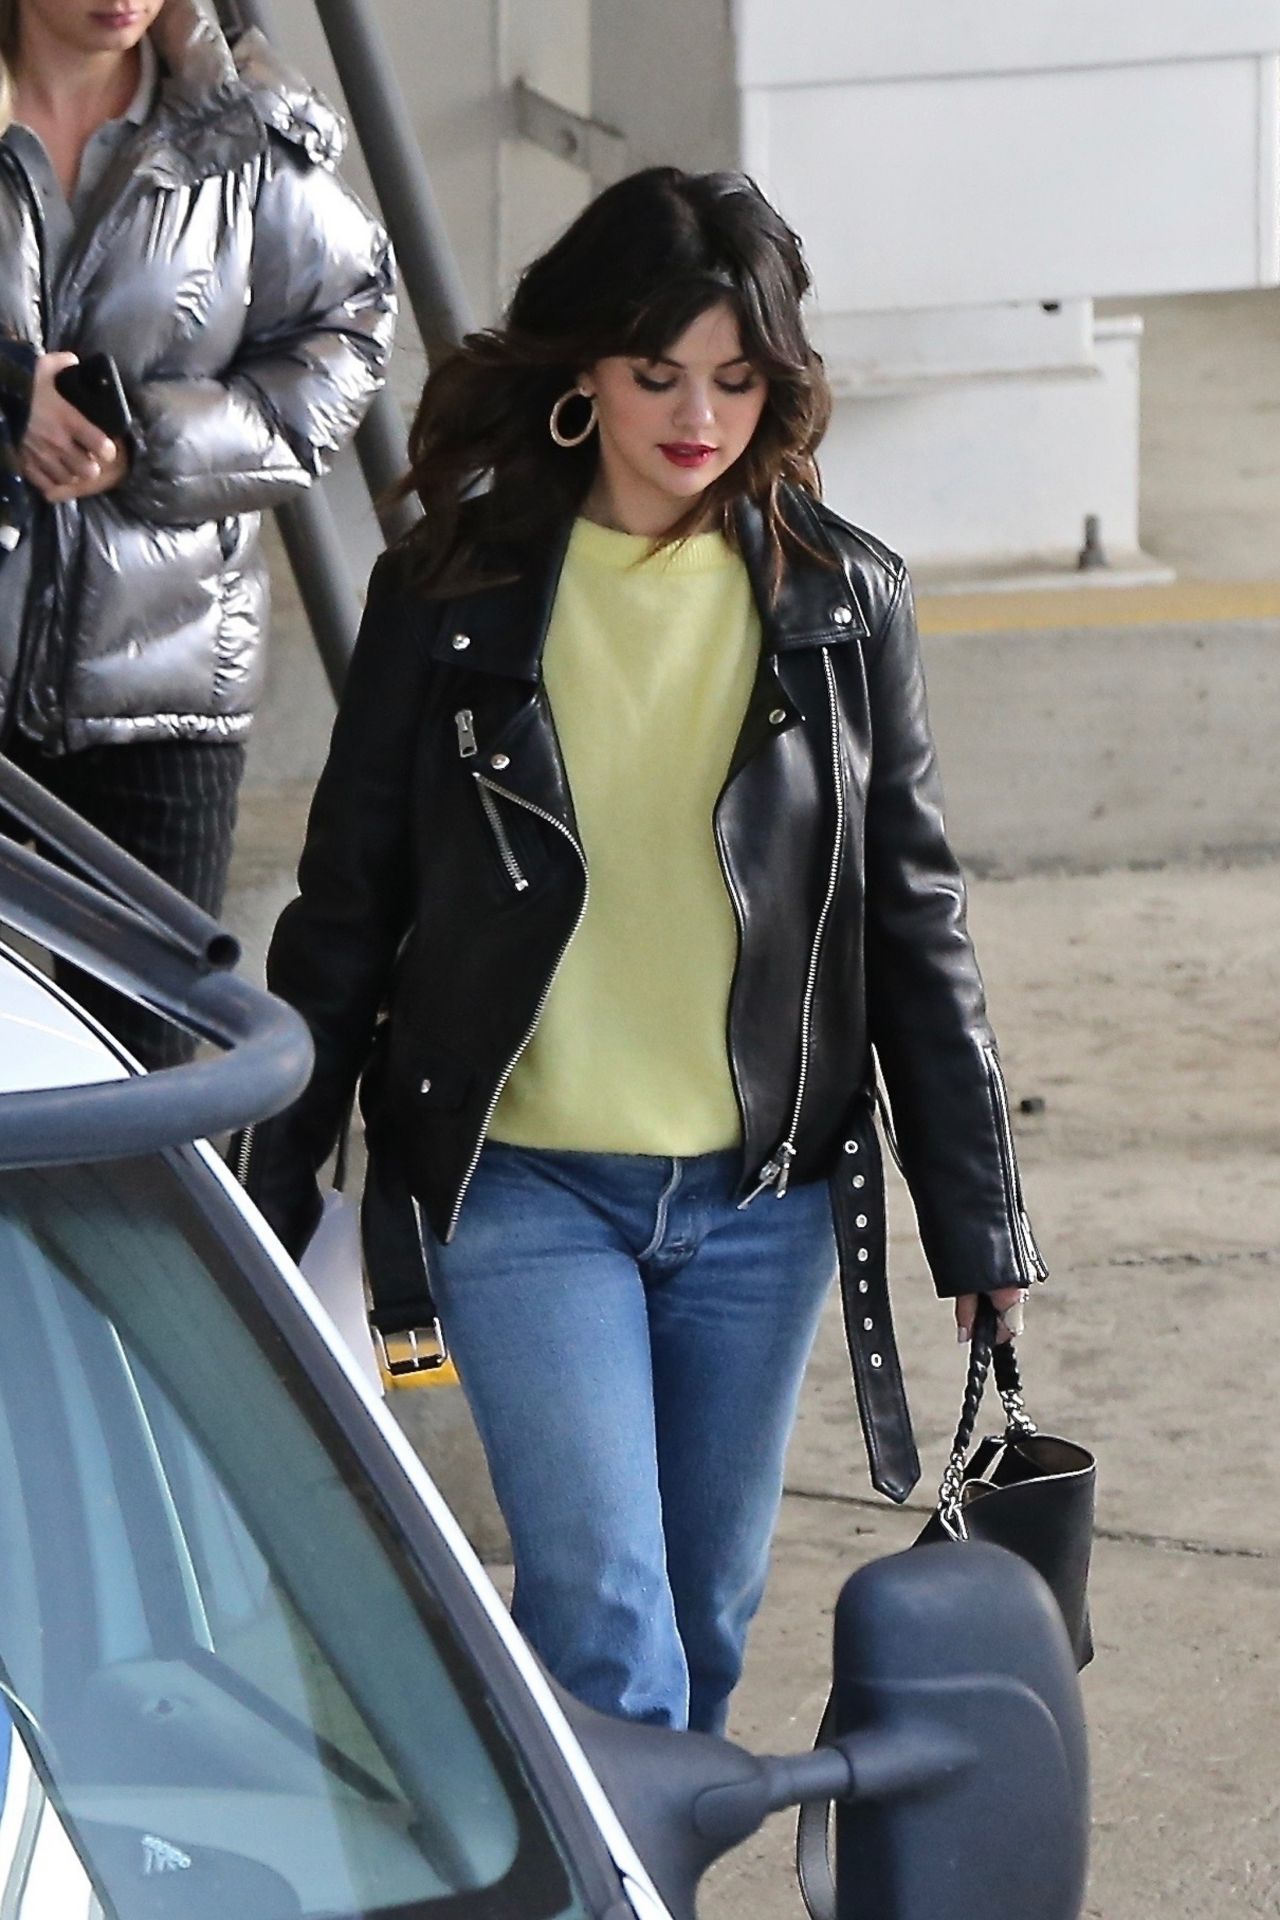 Selena Gomez Dresses Up Leggings in L.A.: Similar Styles